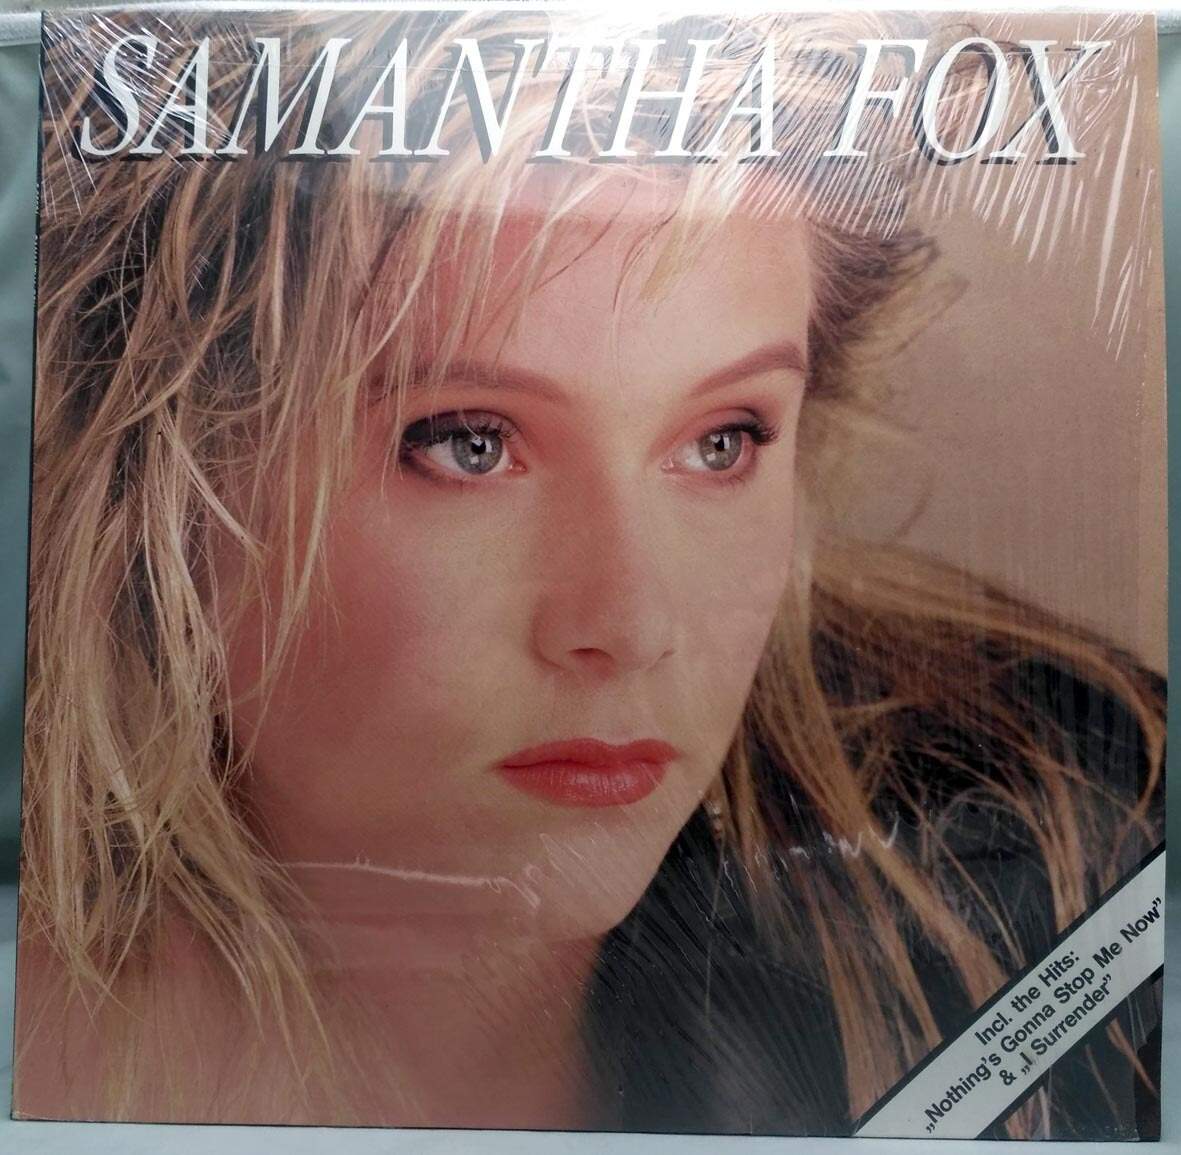 Samantha Fox Samantha Fox 1987 Germany Press Vinyl Lp Aukro 